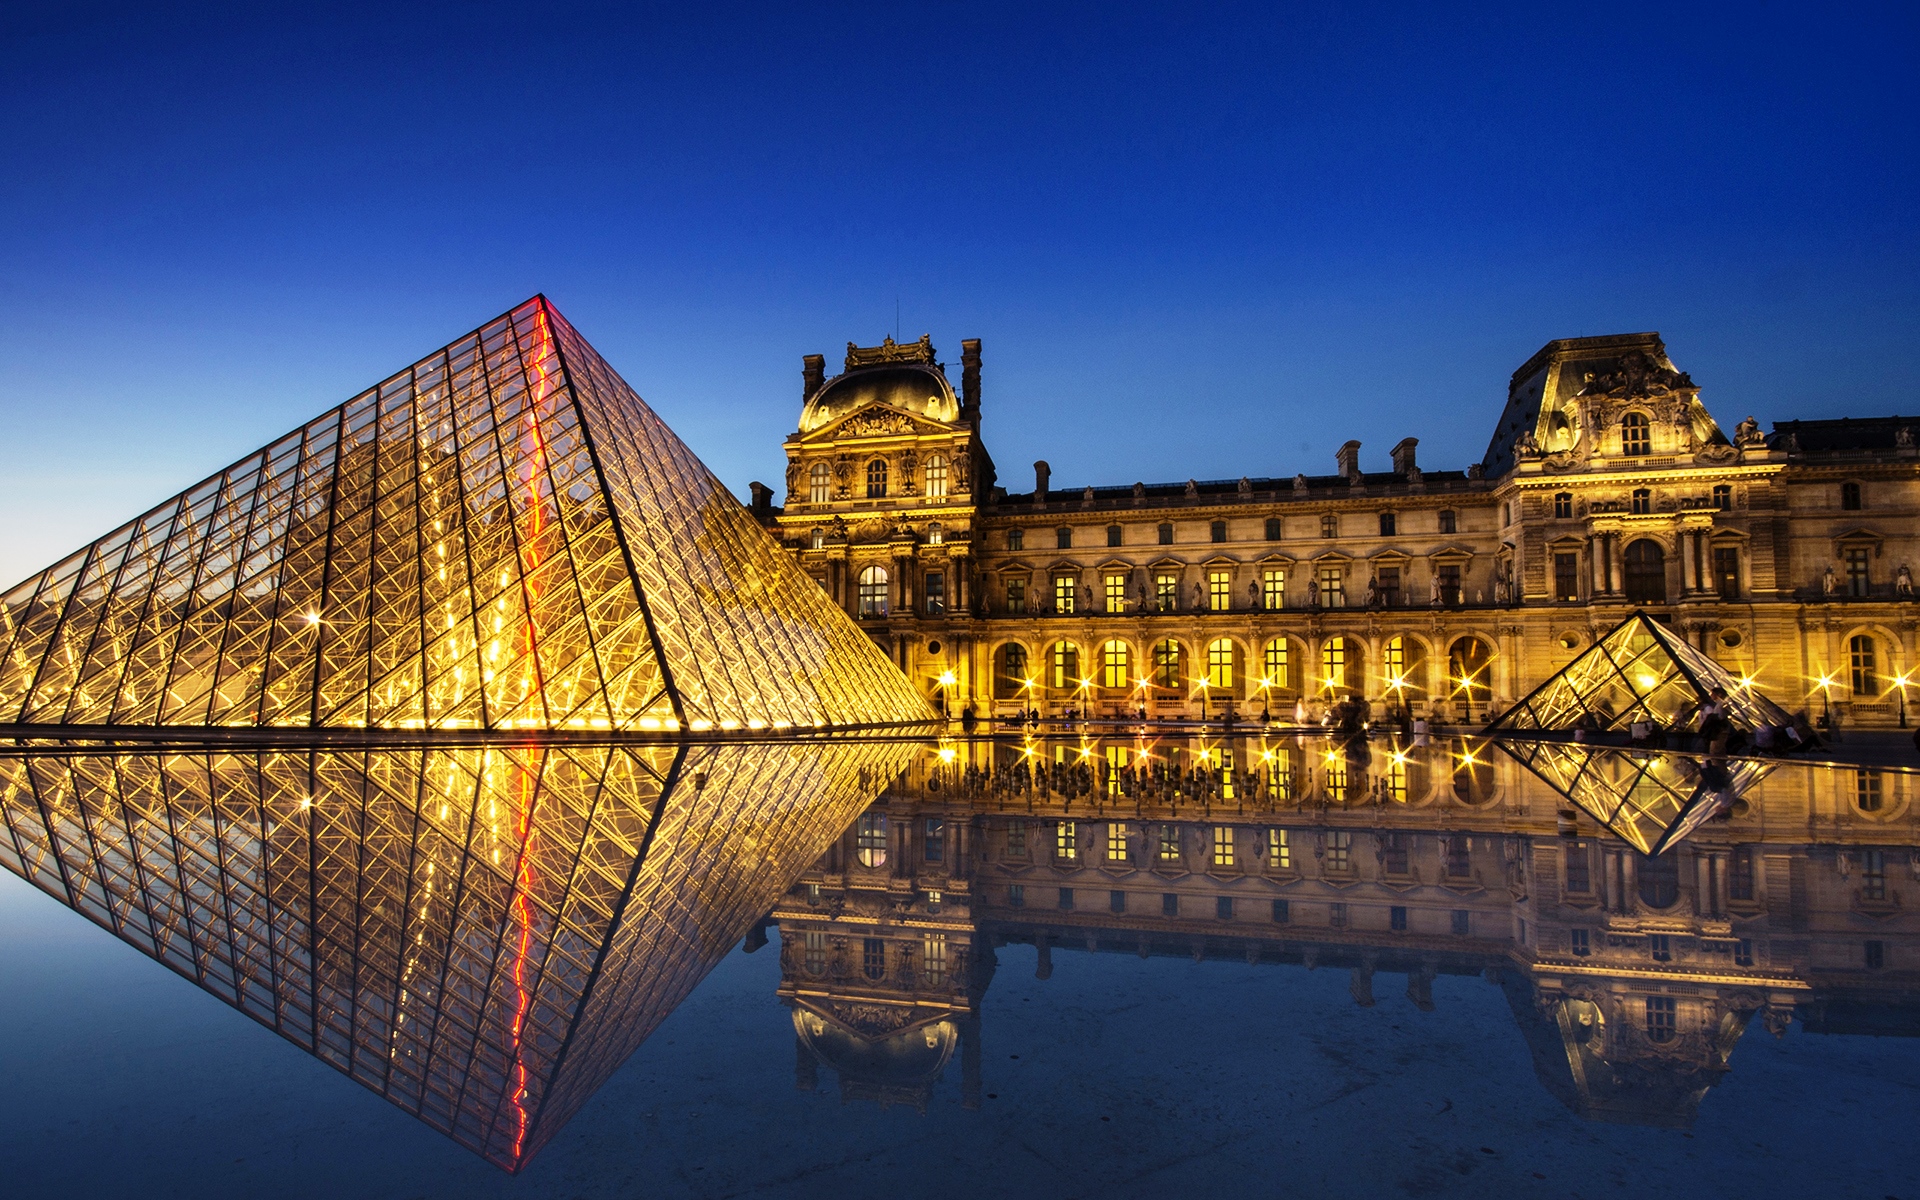 The Louvre HD Wallpaper For Desktop